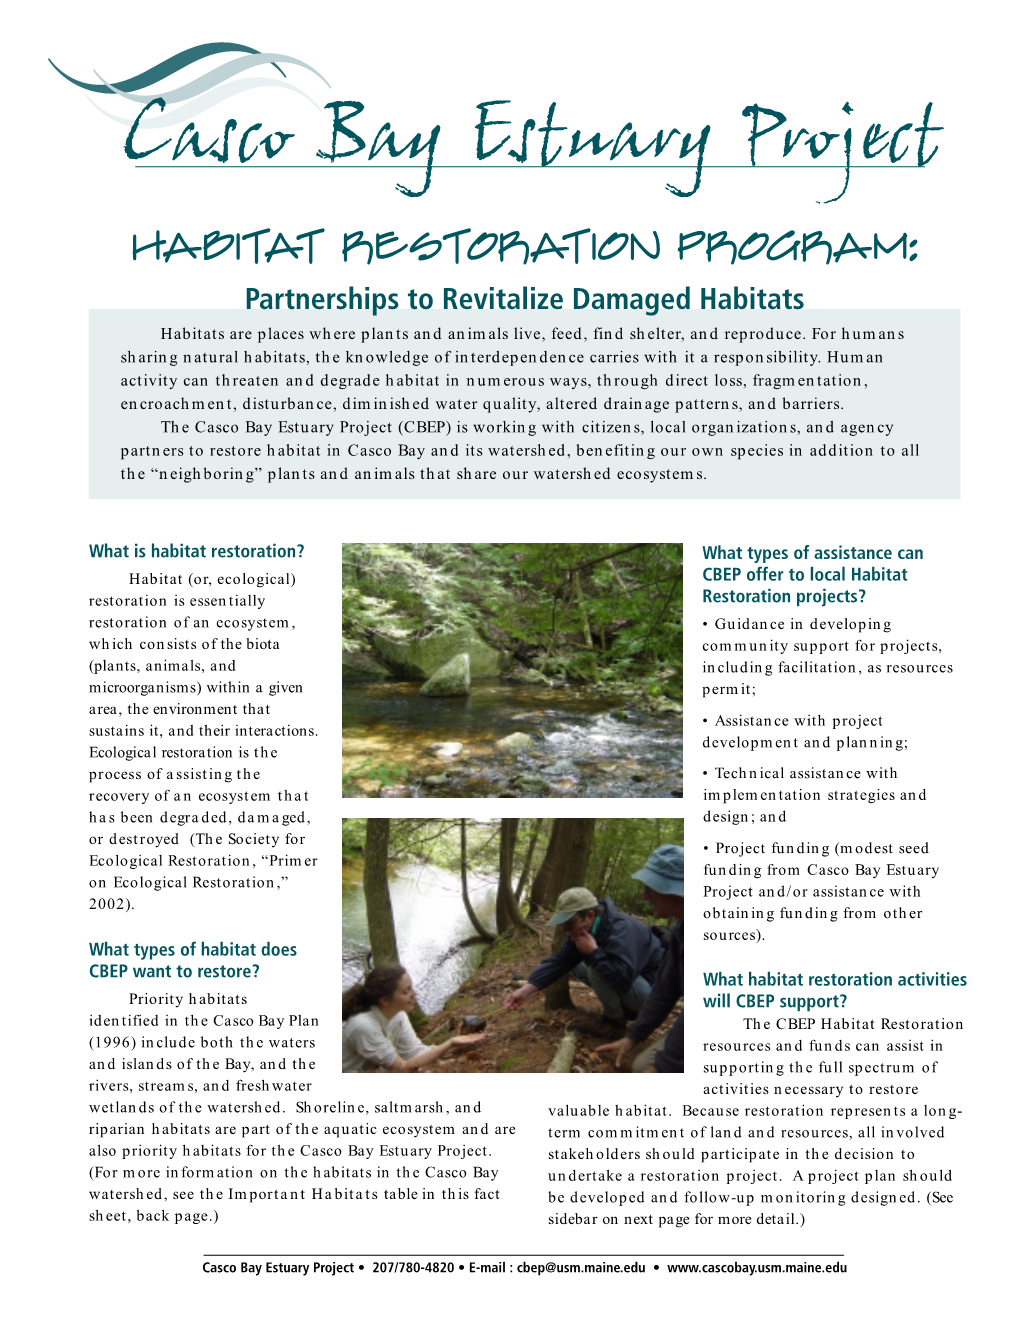 Casco Bay Estuary Project Habitat Restoration Program Partnerships to Revitalize Damaged Habitats